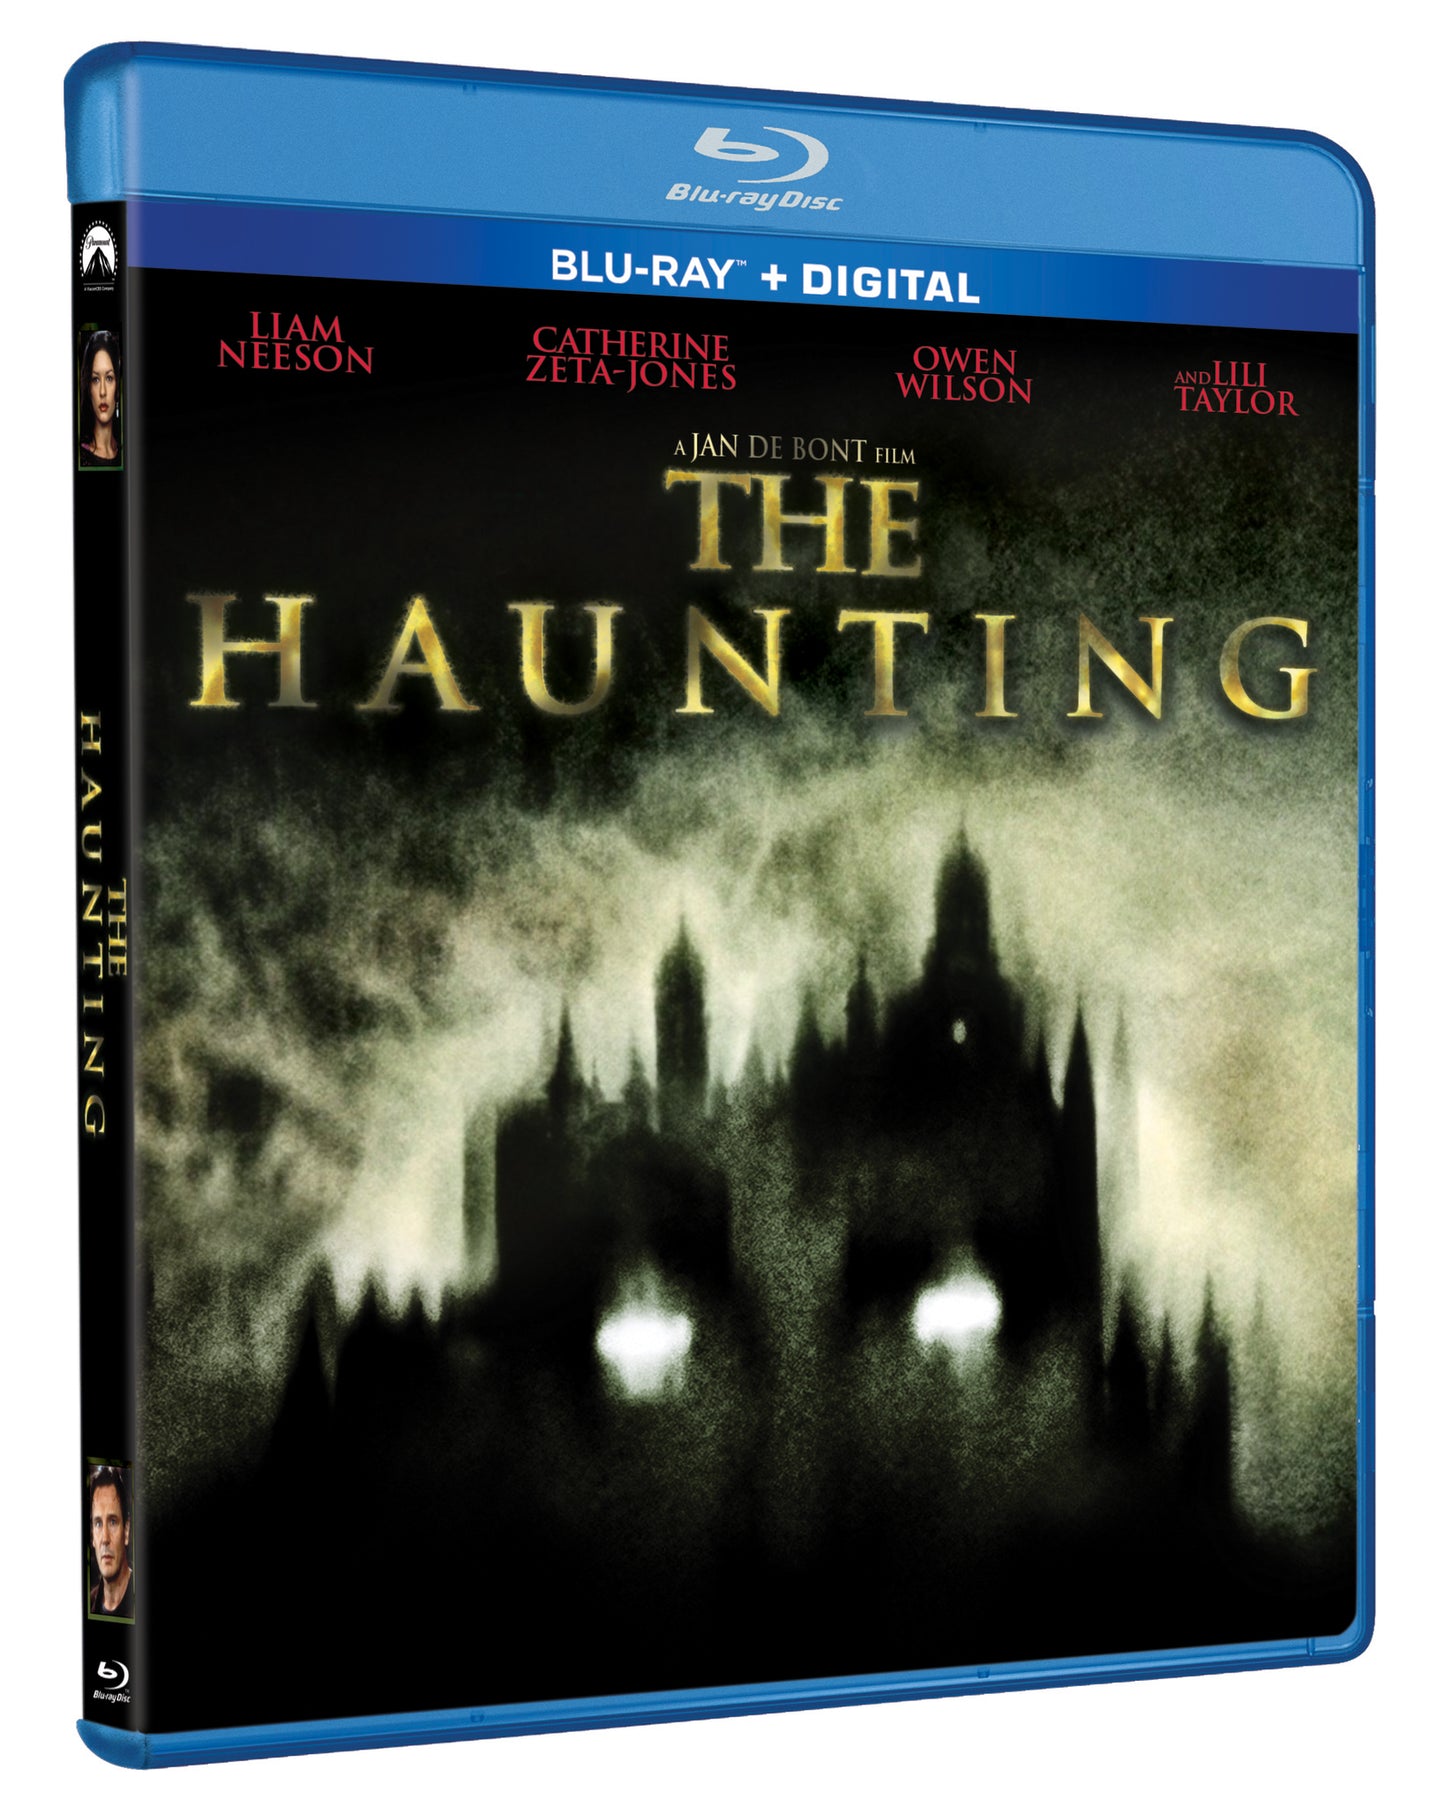 Haunting [Blu-ray] cover art